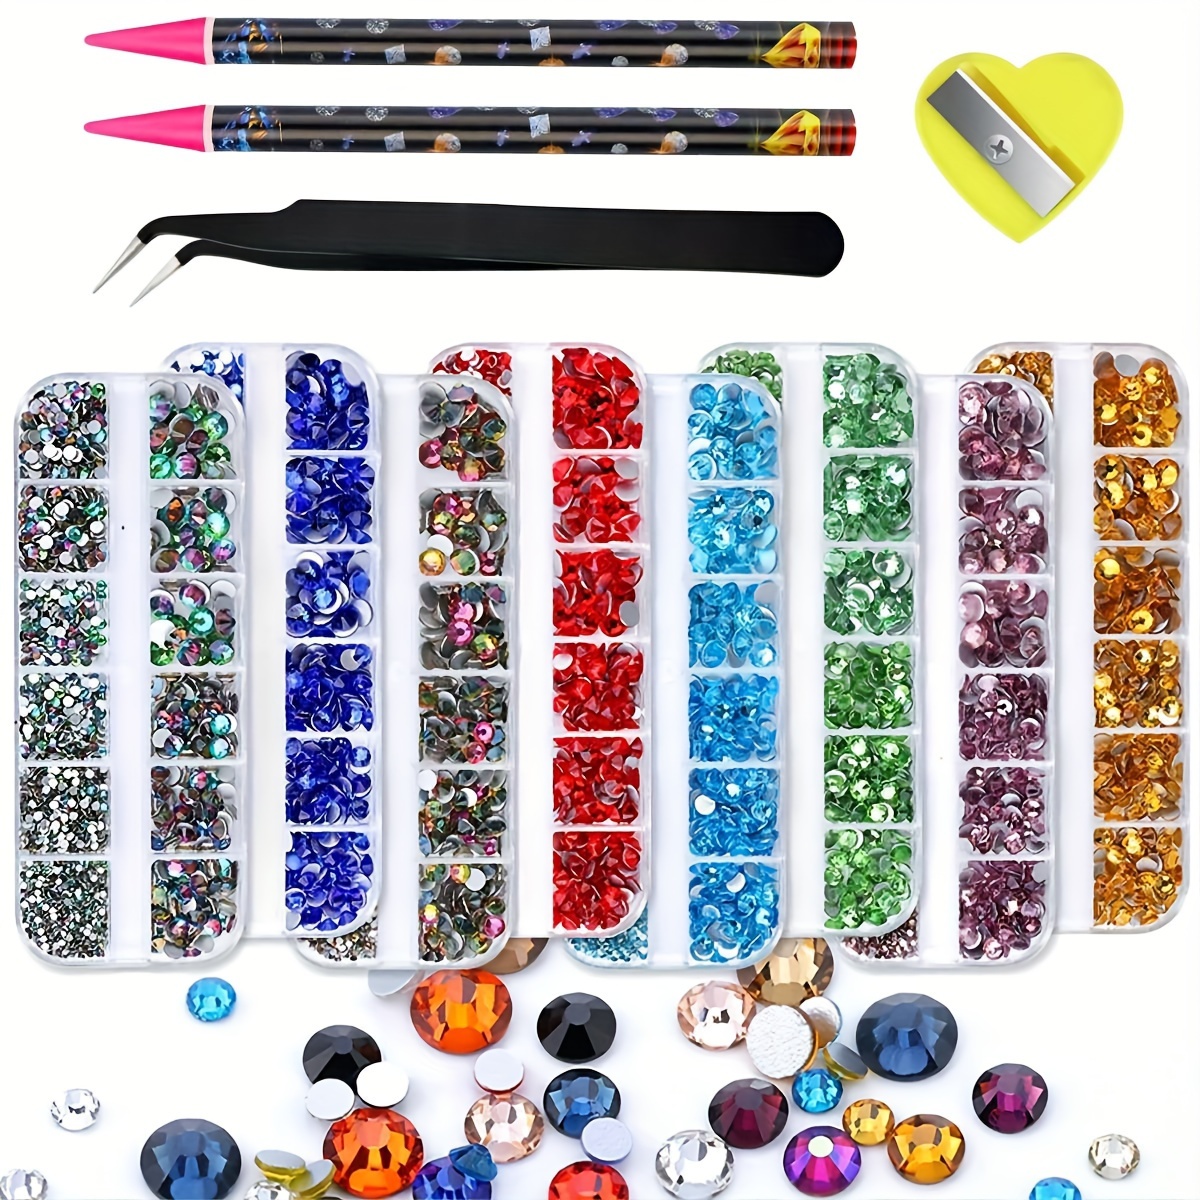 

Nail Art Rhinestone Kit, Resin Flatback Crystals With Pick-up Pen, Tweezers, Diy Nail Decorations For Girls & Women